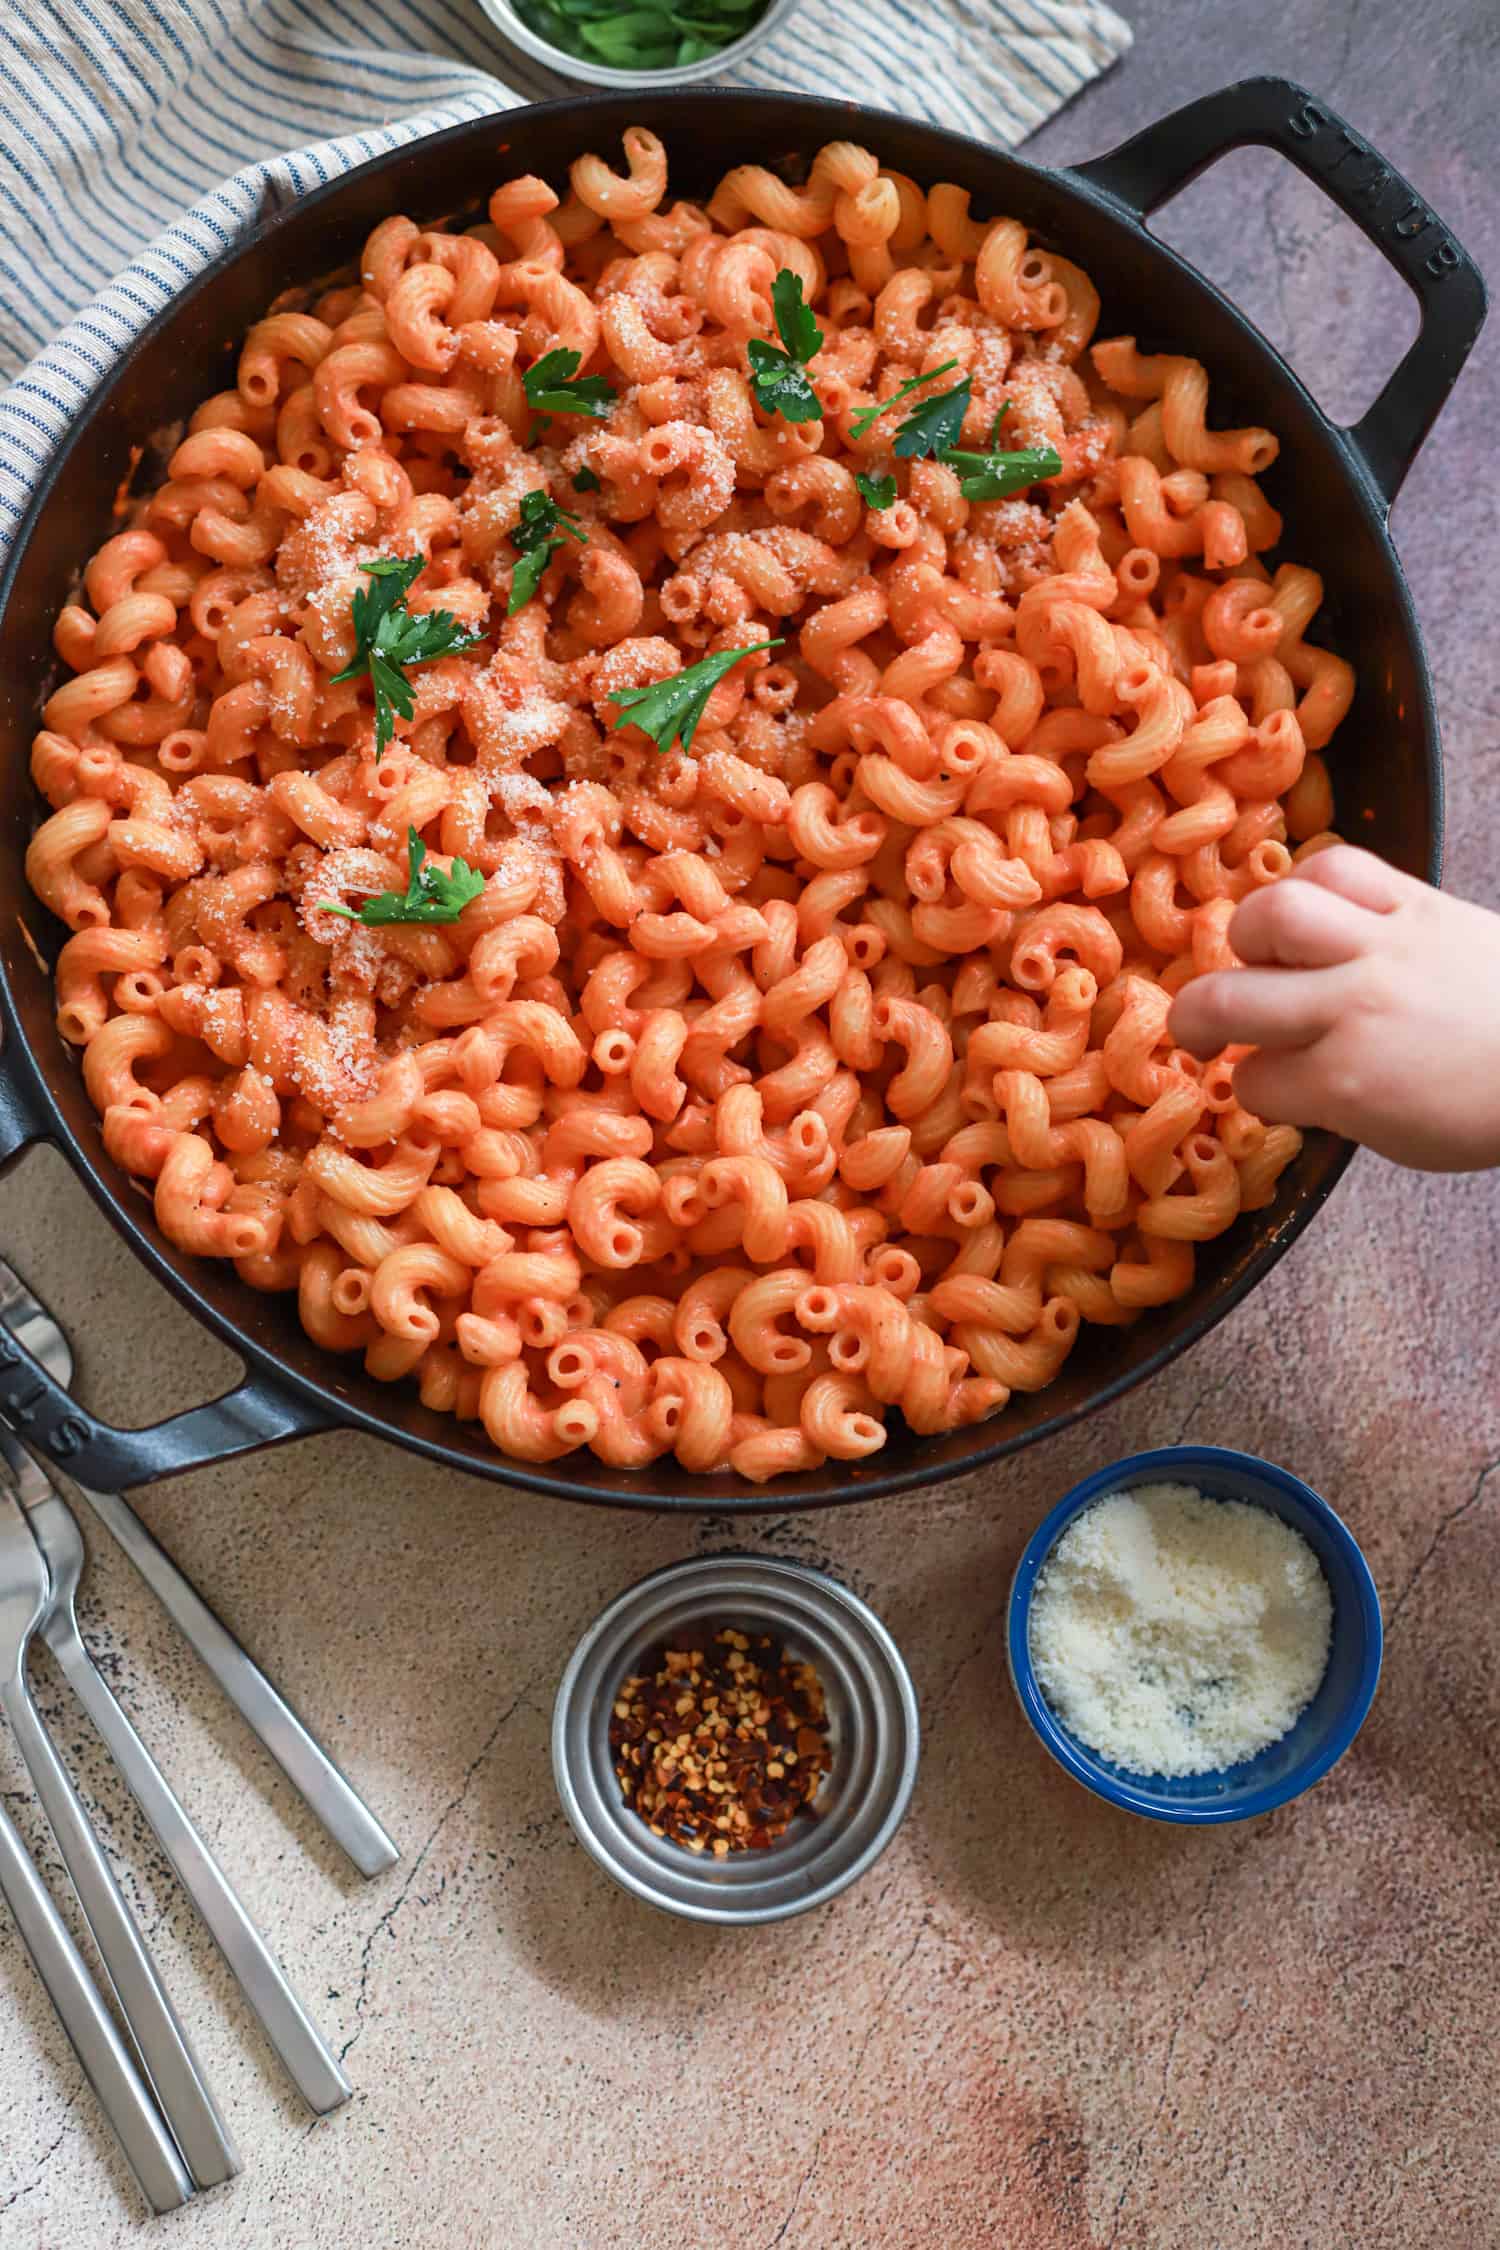 child's hand reaching for pasta in creamy tomato sauce.